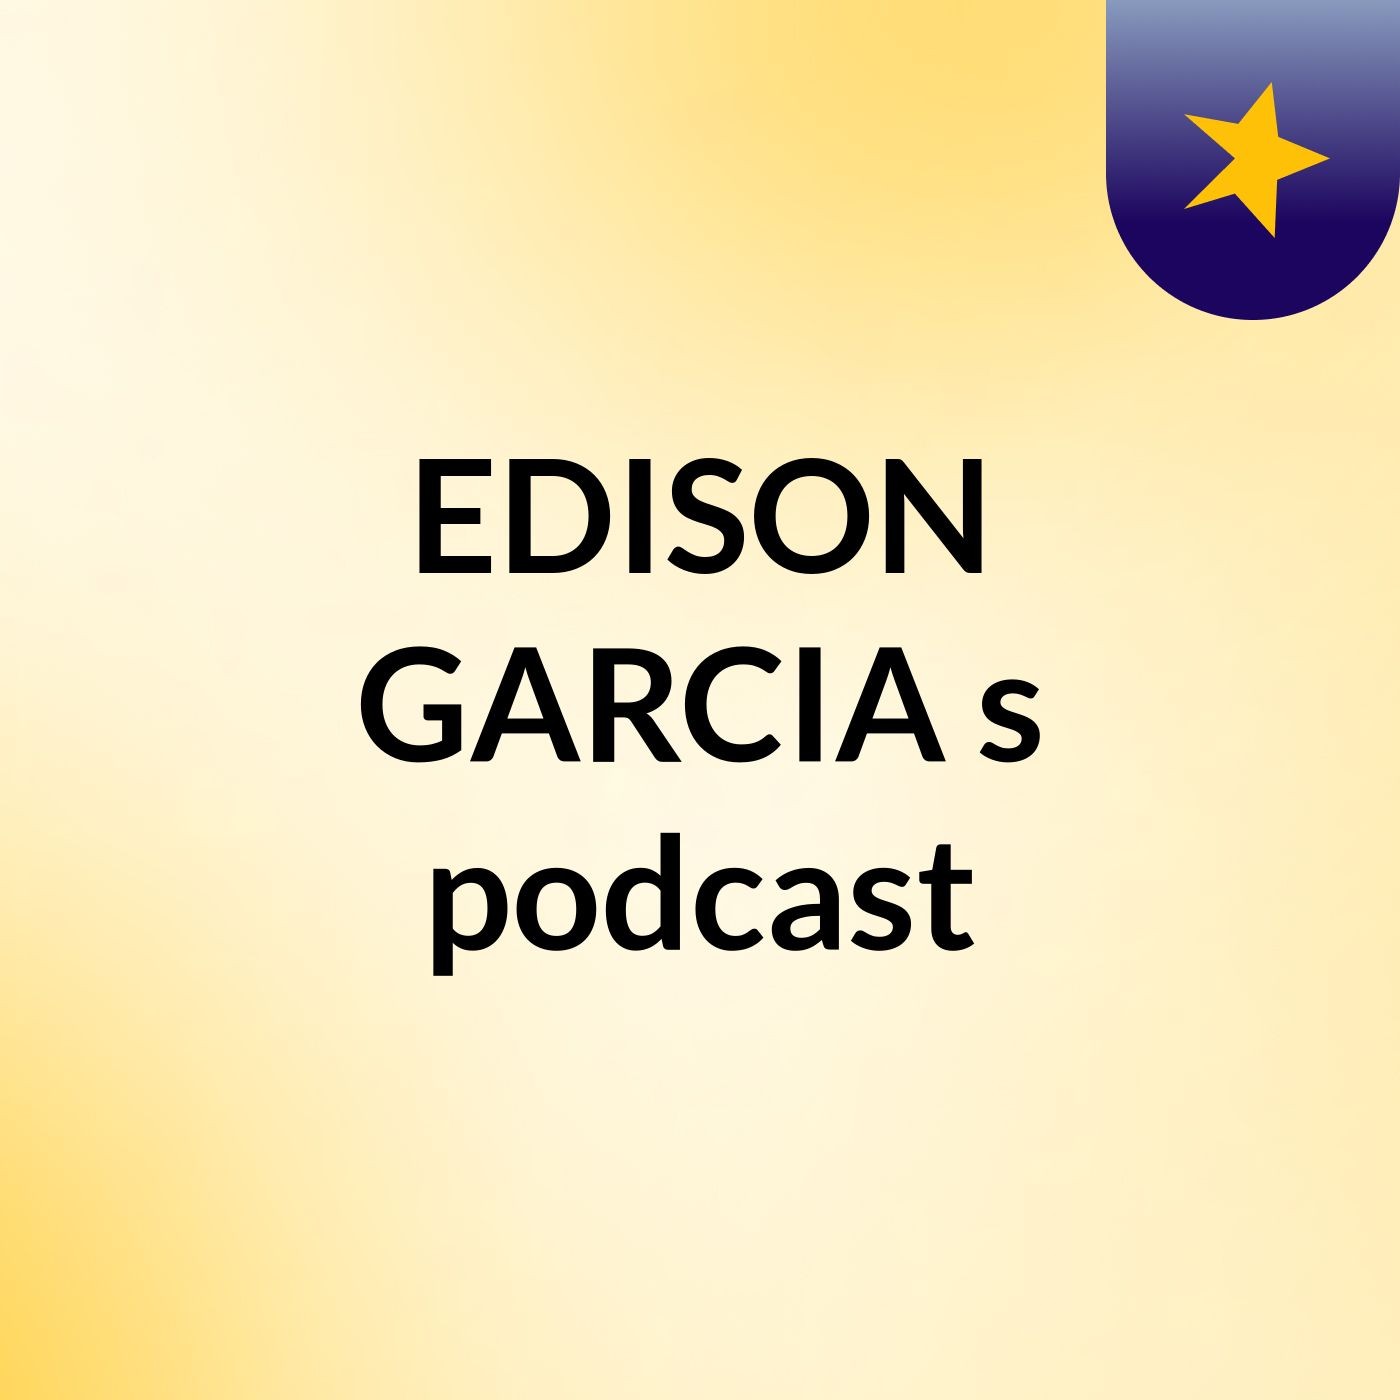 EDISON GARCIA's podcast